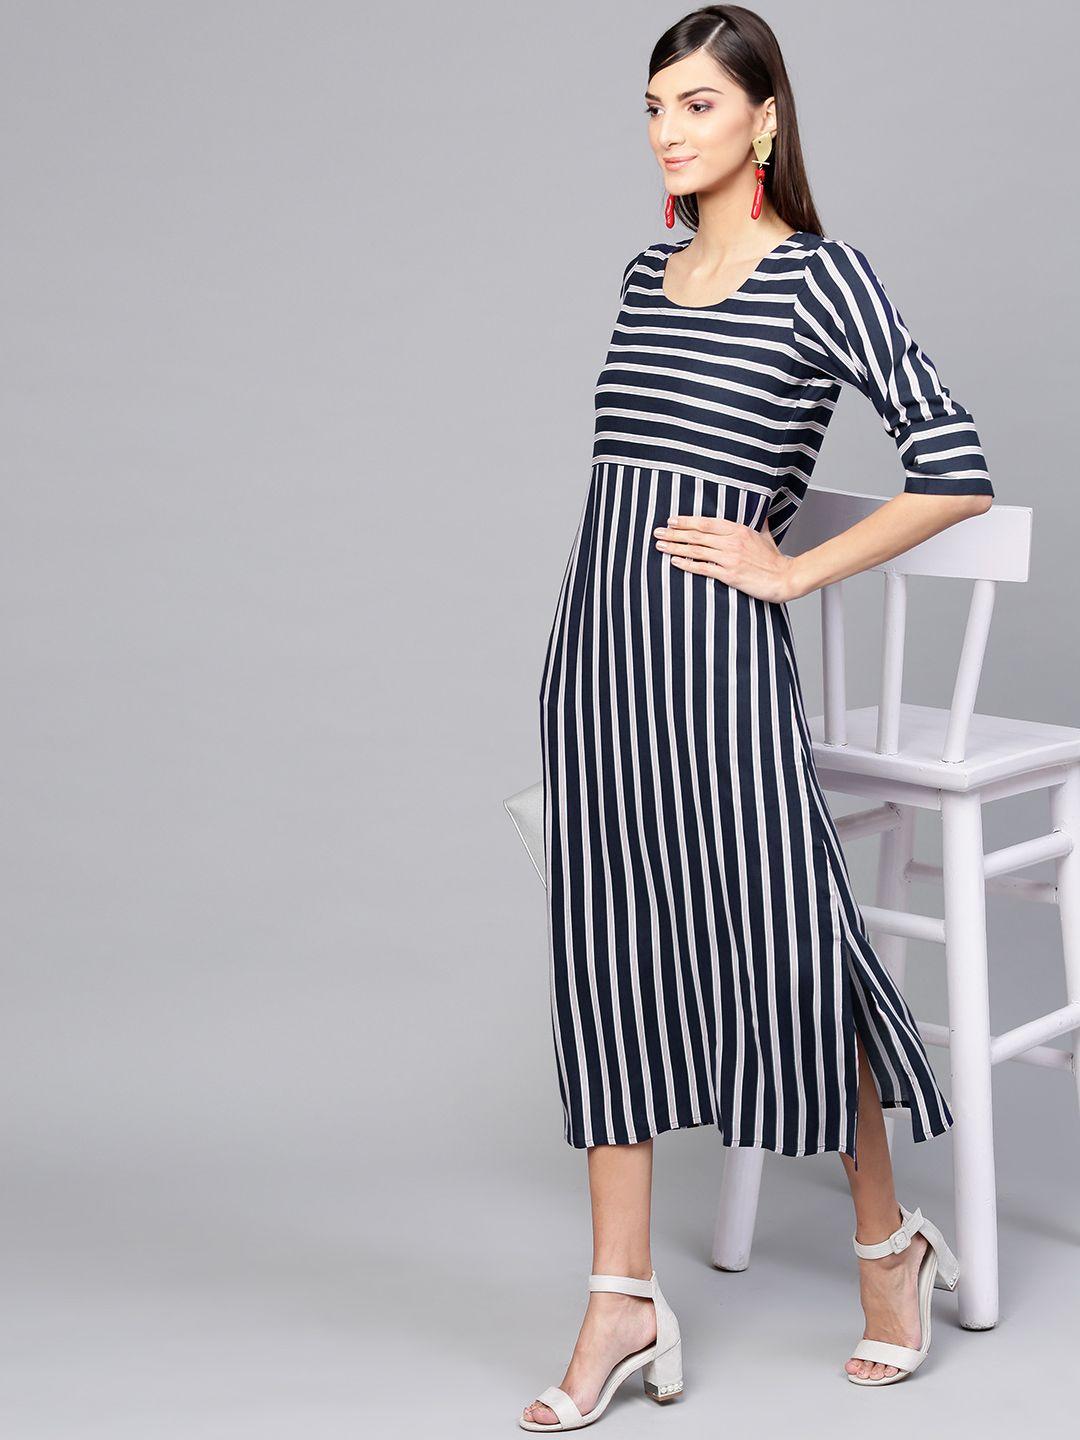 gerua women navy blue & white striped a-line dress